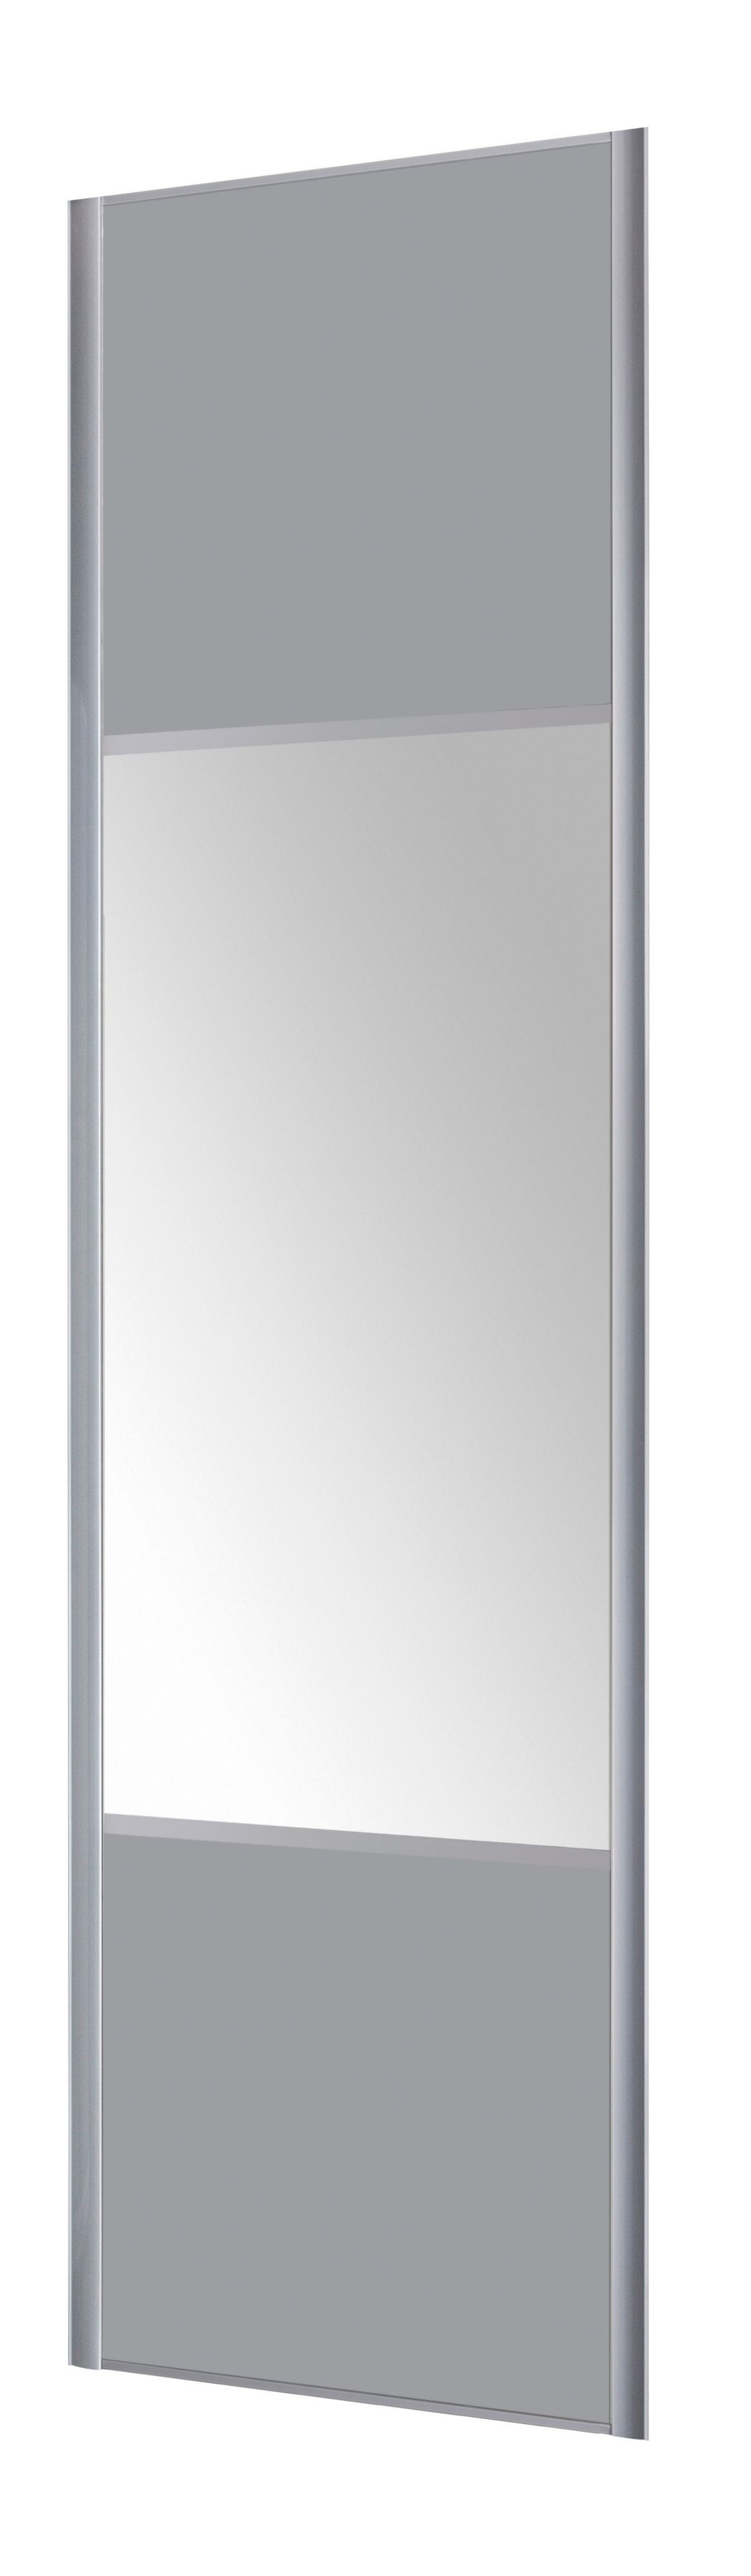 Form Valla Panelled Light grey Mirrored Sliding wardrobe door (H) 2260mm x (W) 922mm